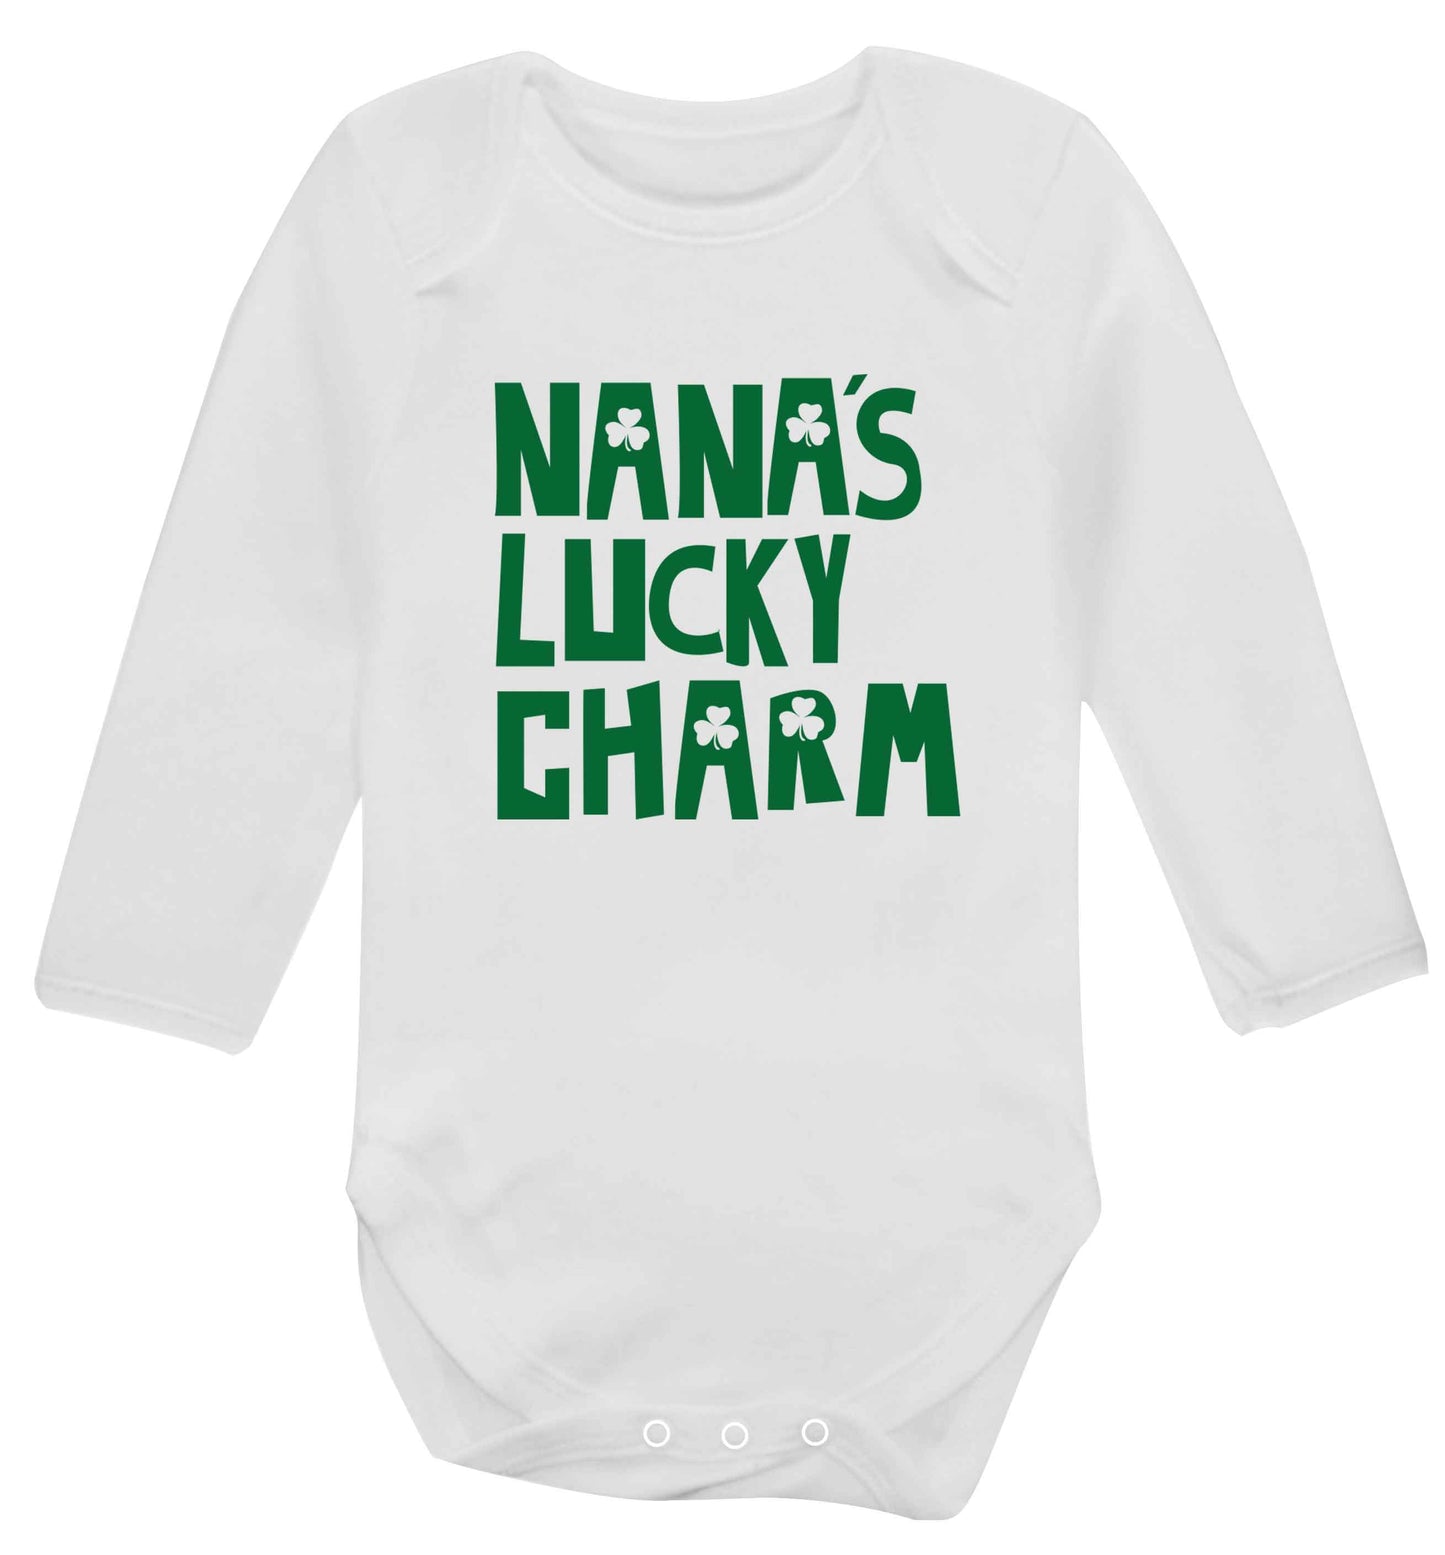 Nana's lucky charm baby vest long sleeved white 6-12 months